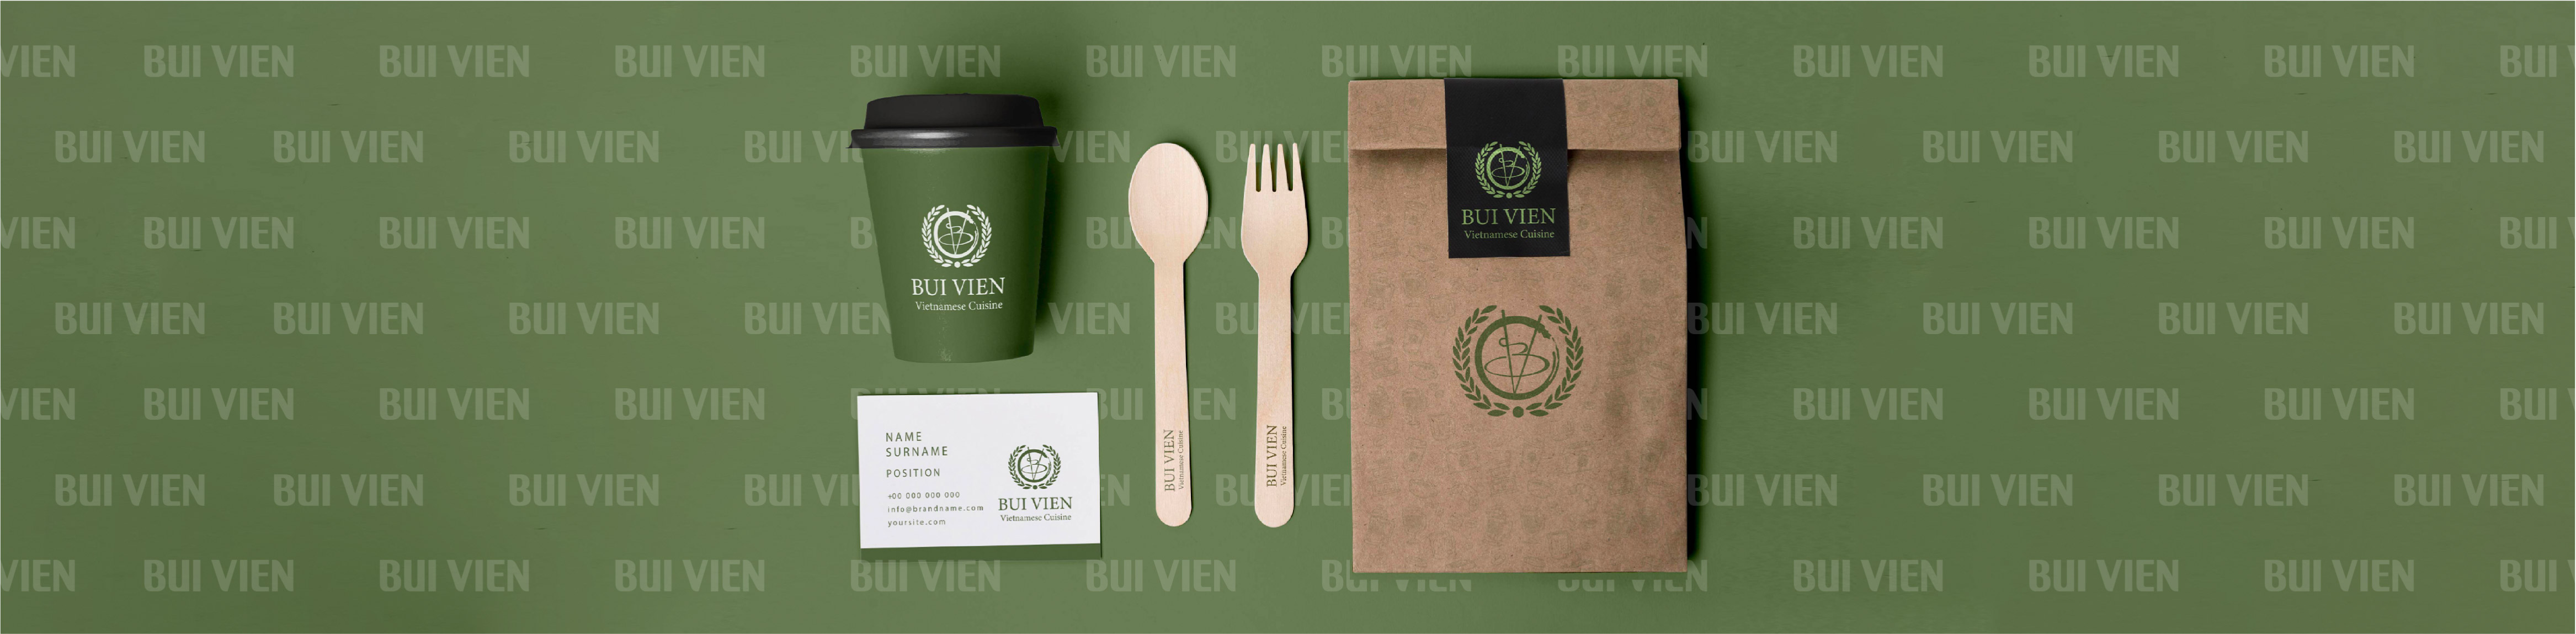 Thiết kế Logo Bui Vien